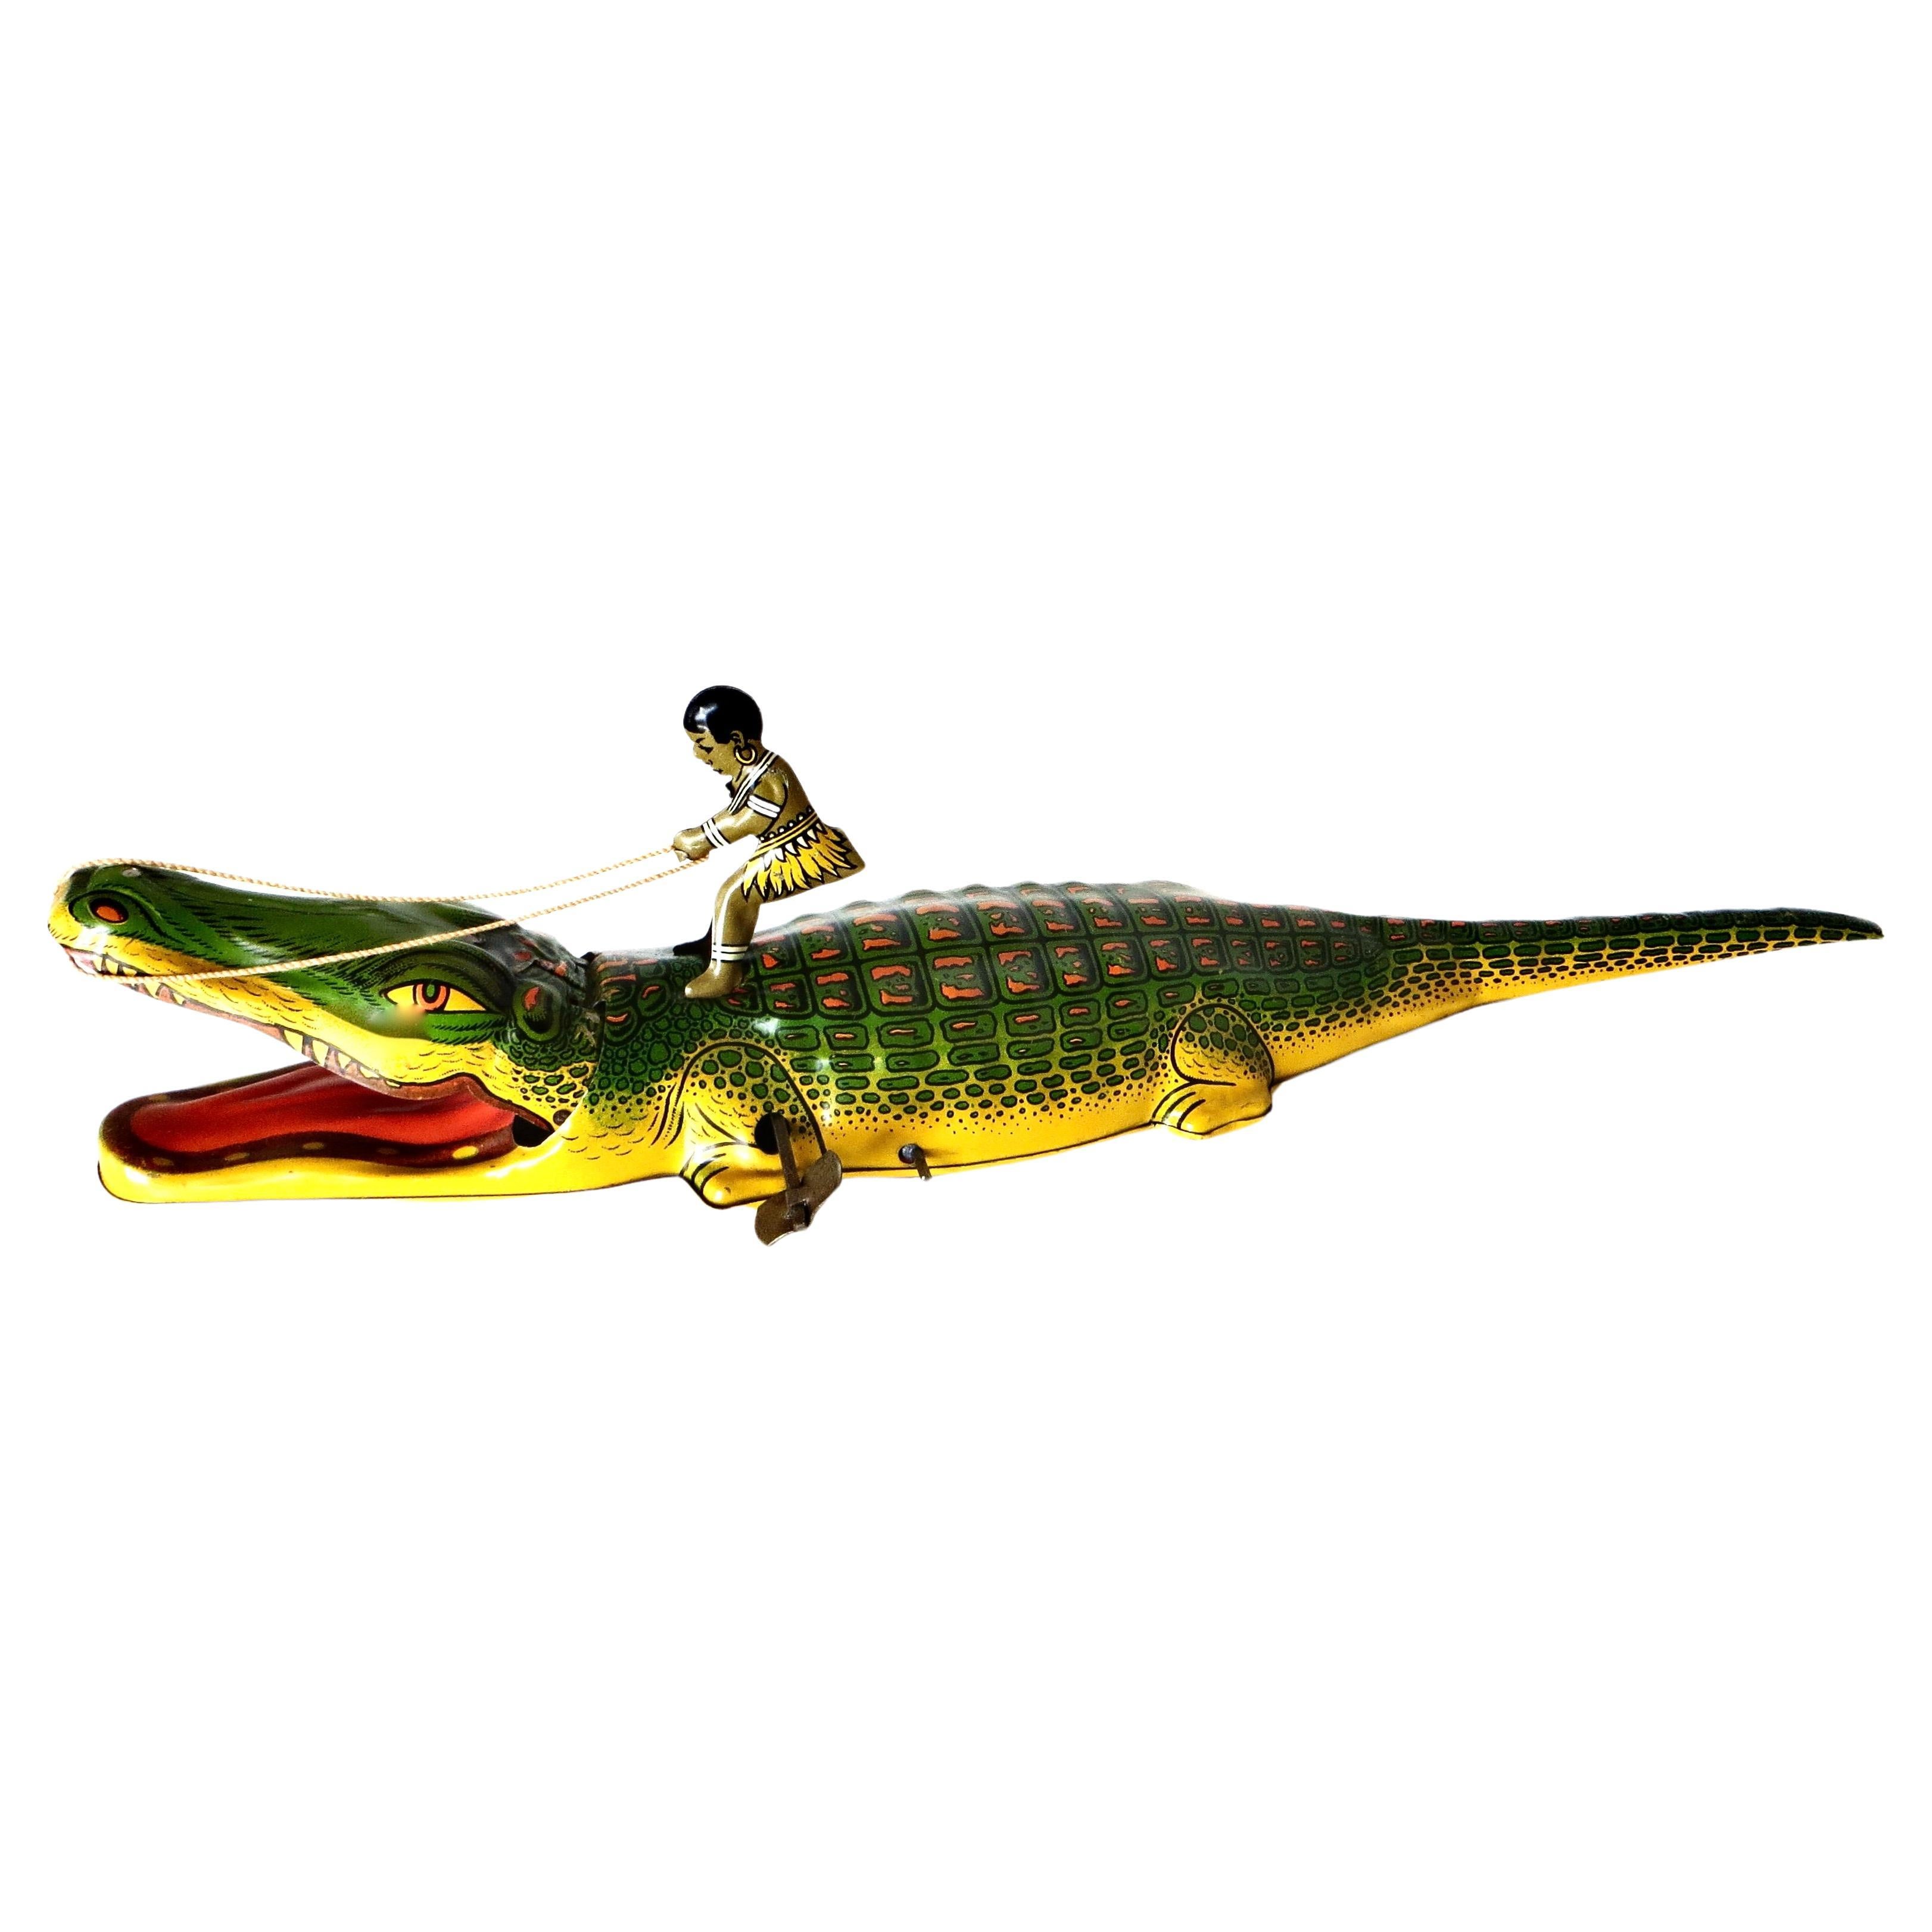 "Boy Riding An Alligator" Vintage Wind-Up Toy by J. Chein Co., N.J., Circa 1935